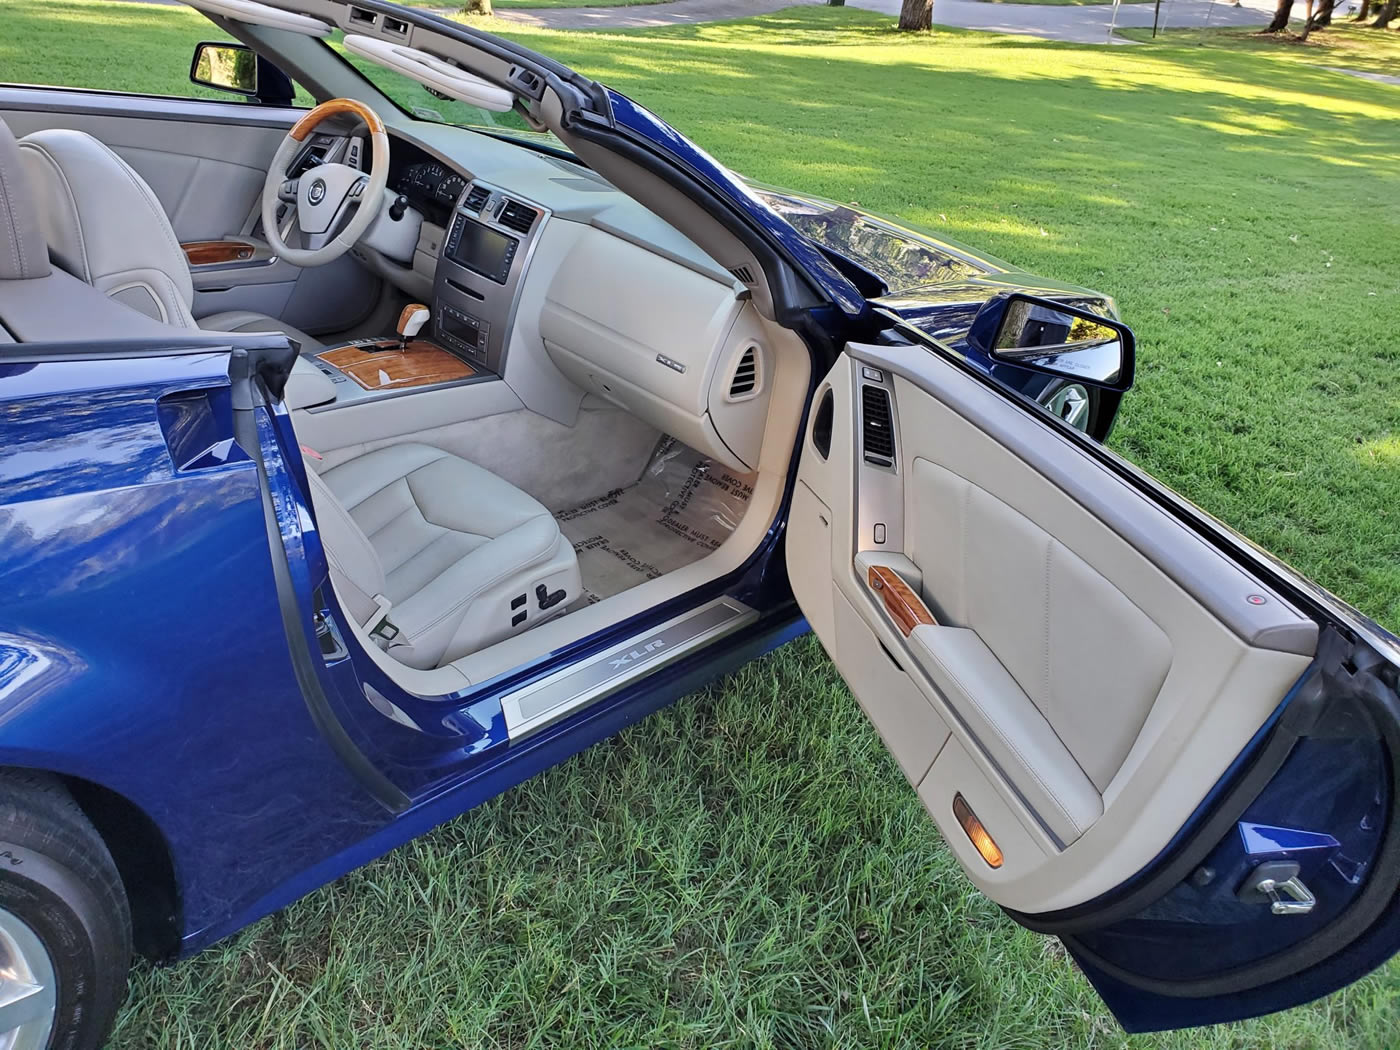 2004 Cadillac XLR in Xenon Blue